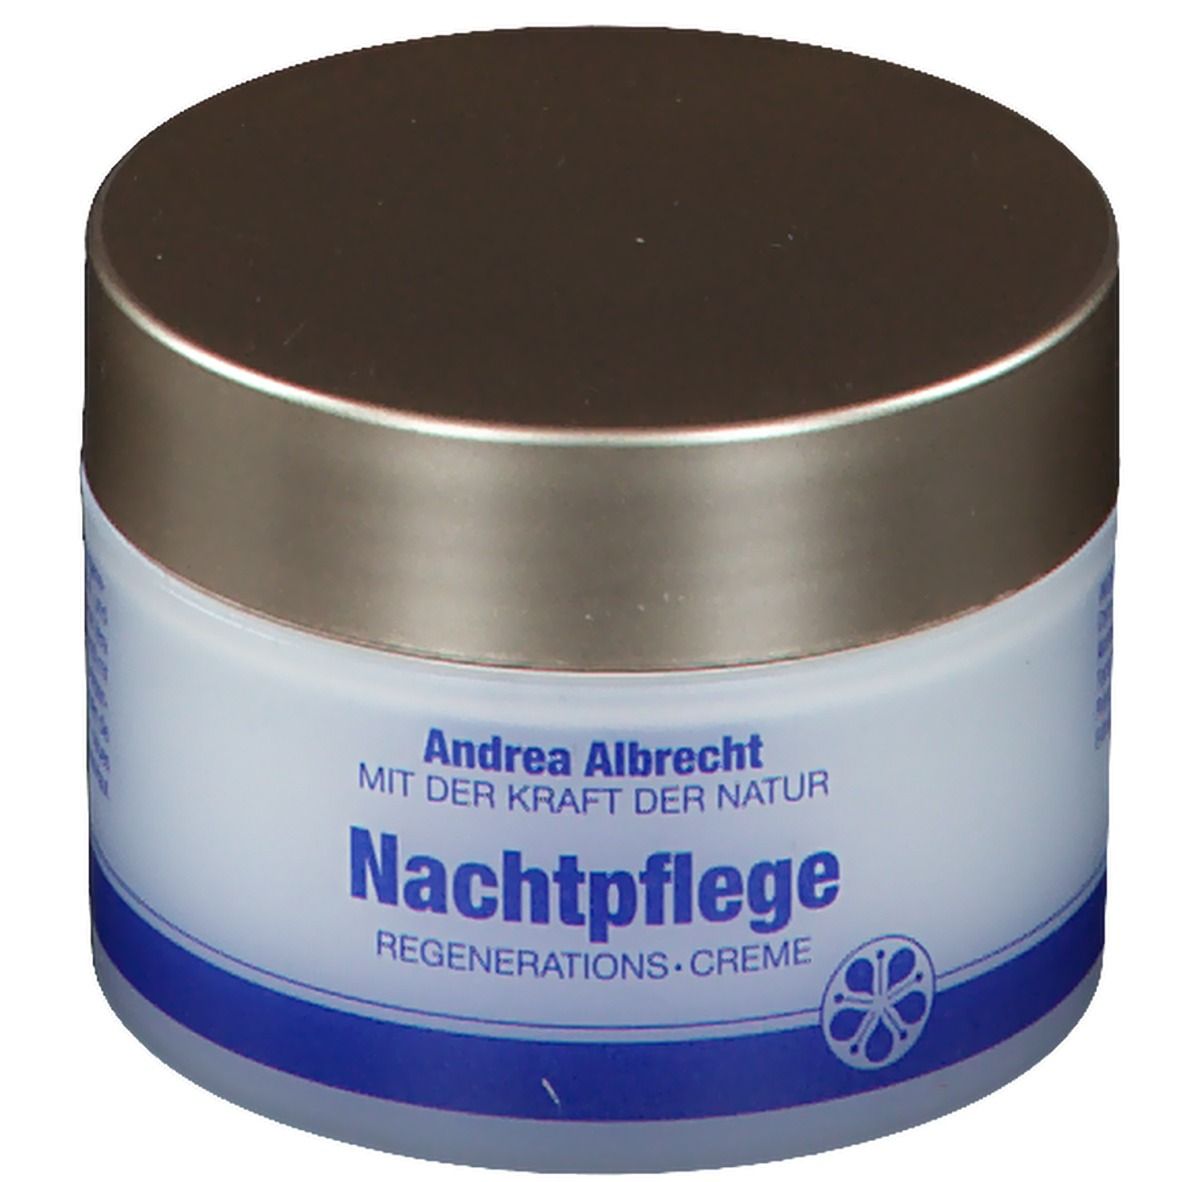 Andrea Albrecht Nachtpflege-Creme